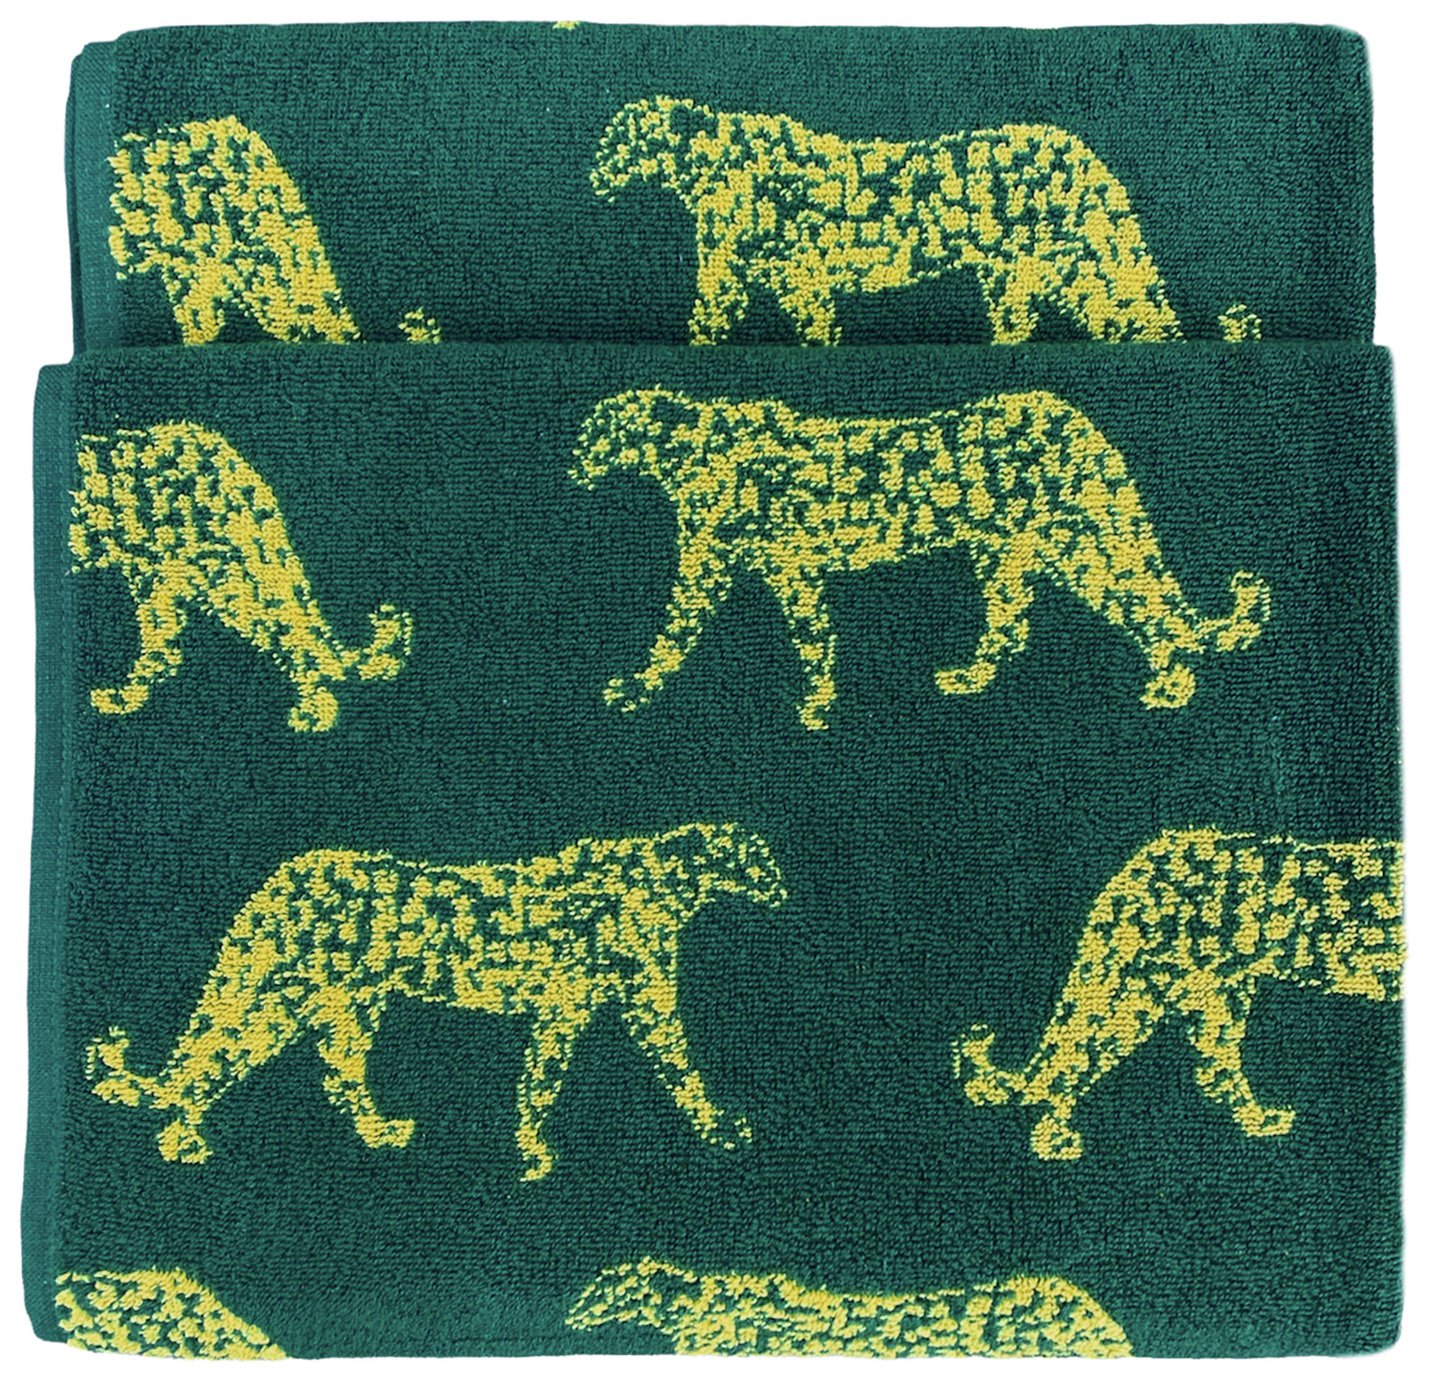 Furn Turkish Cotton Leopard Patterned Bath Towel -Teal Green